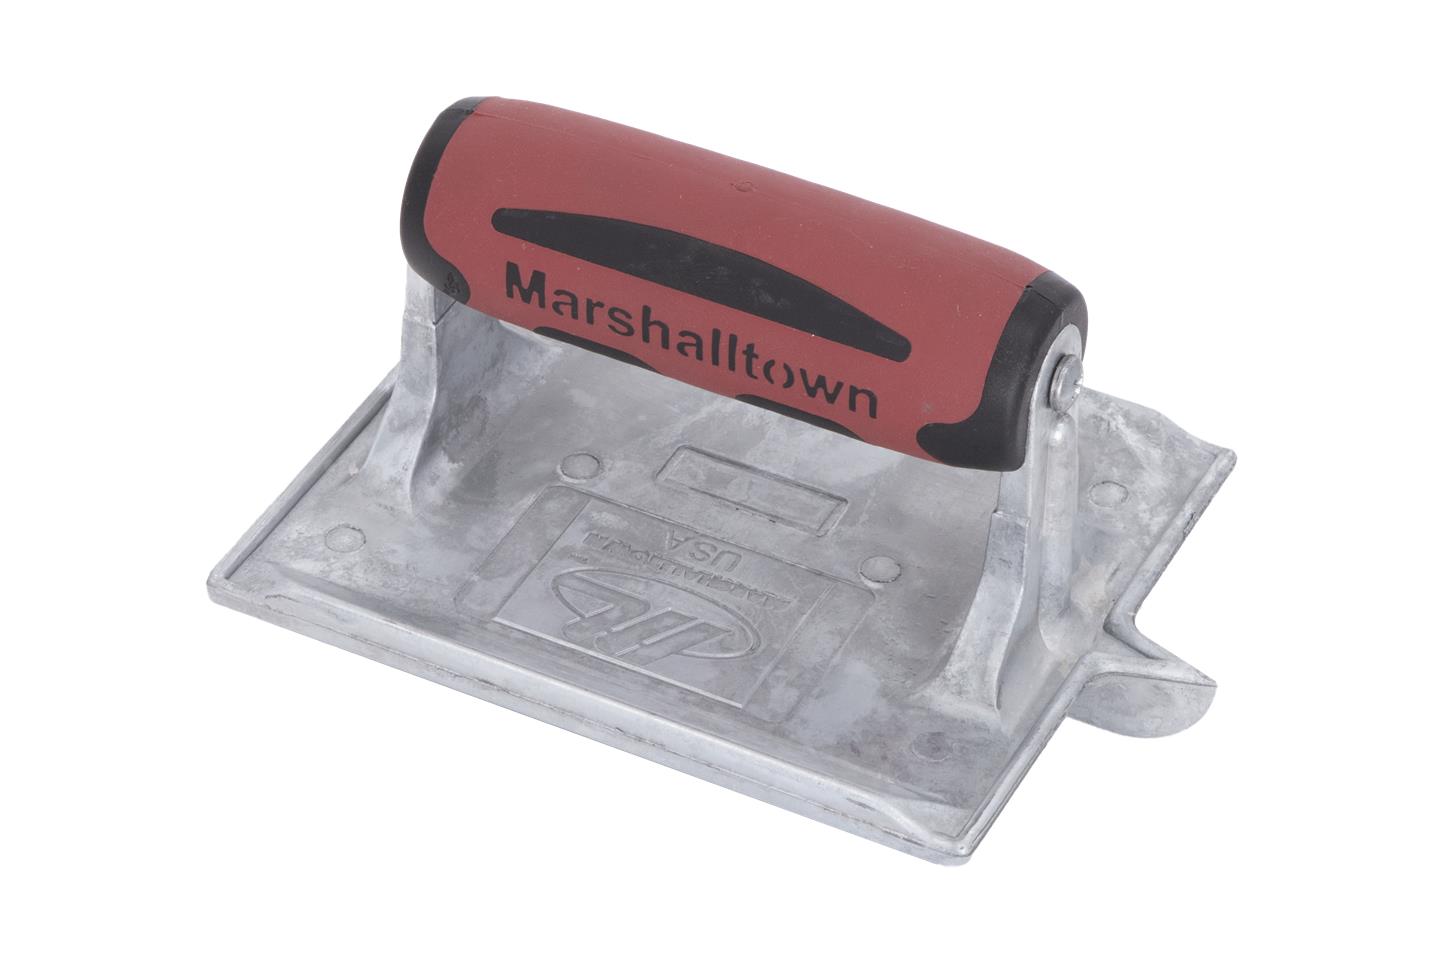 Marshalltown 14105 6 X 4 3-8 Zinc Groover-1-2D X 3-8 Bit-DuraSoft Handle